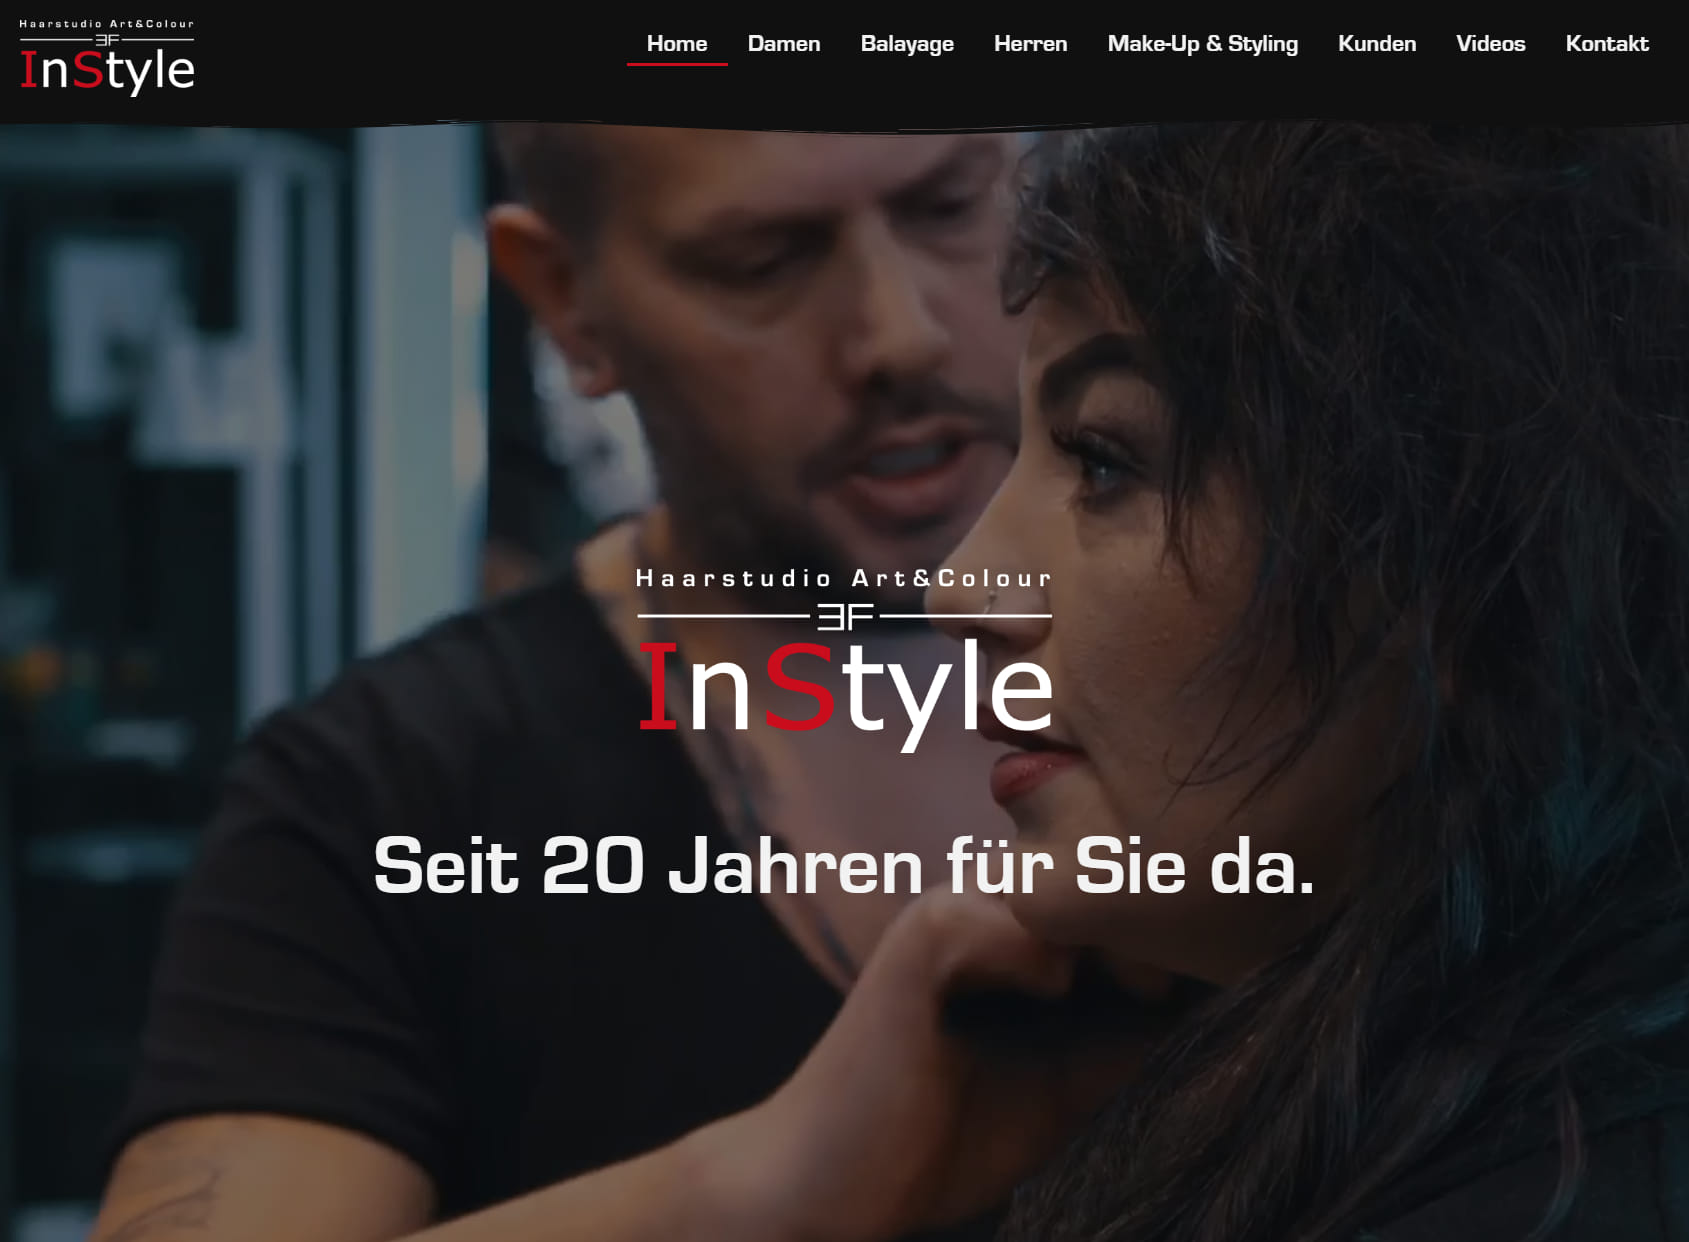 EF Instyle GmbH